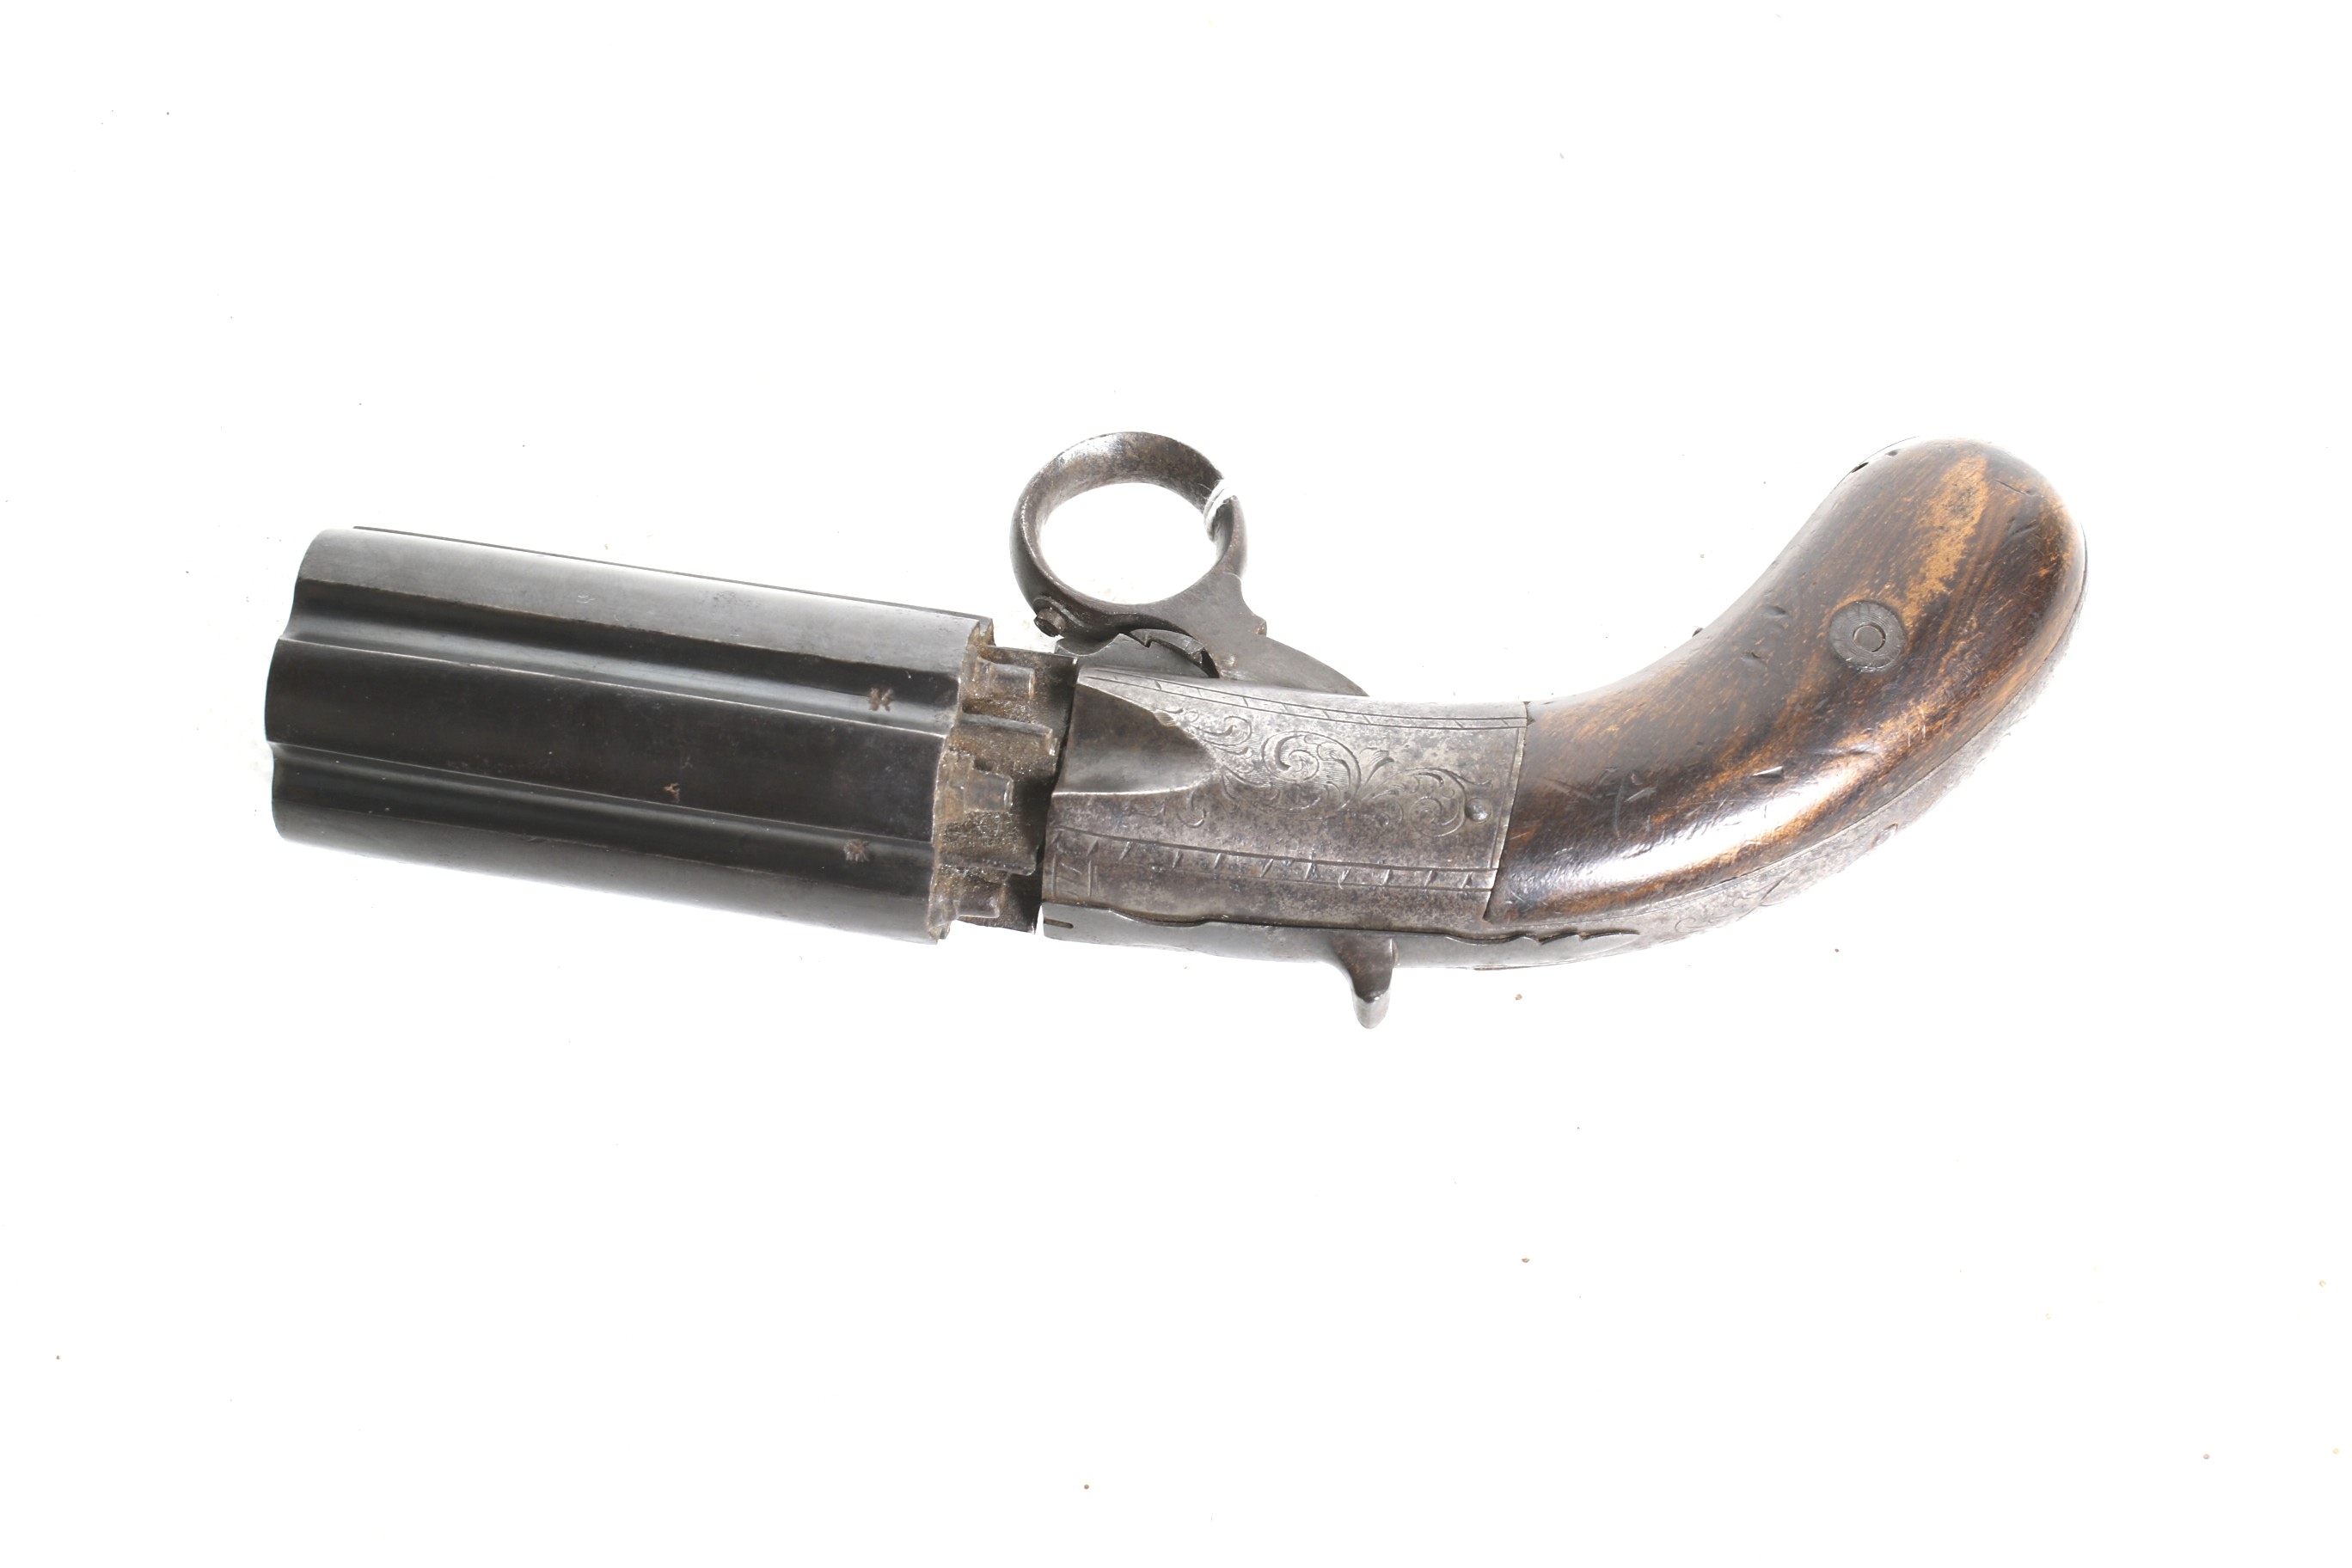 An English under hammer Pepperbox pistol. - Image 4 of 4